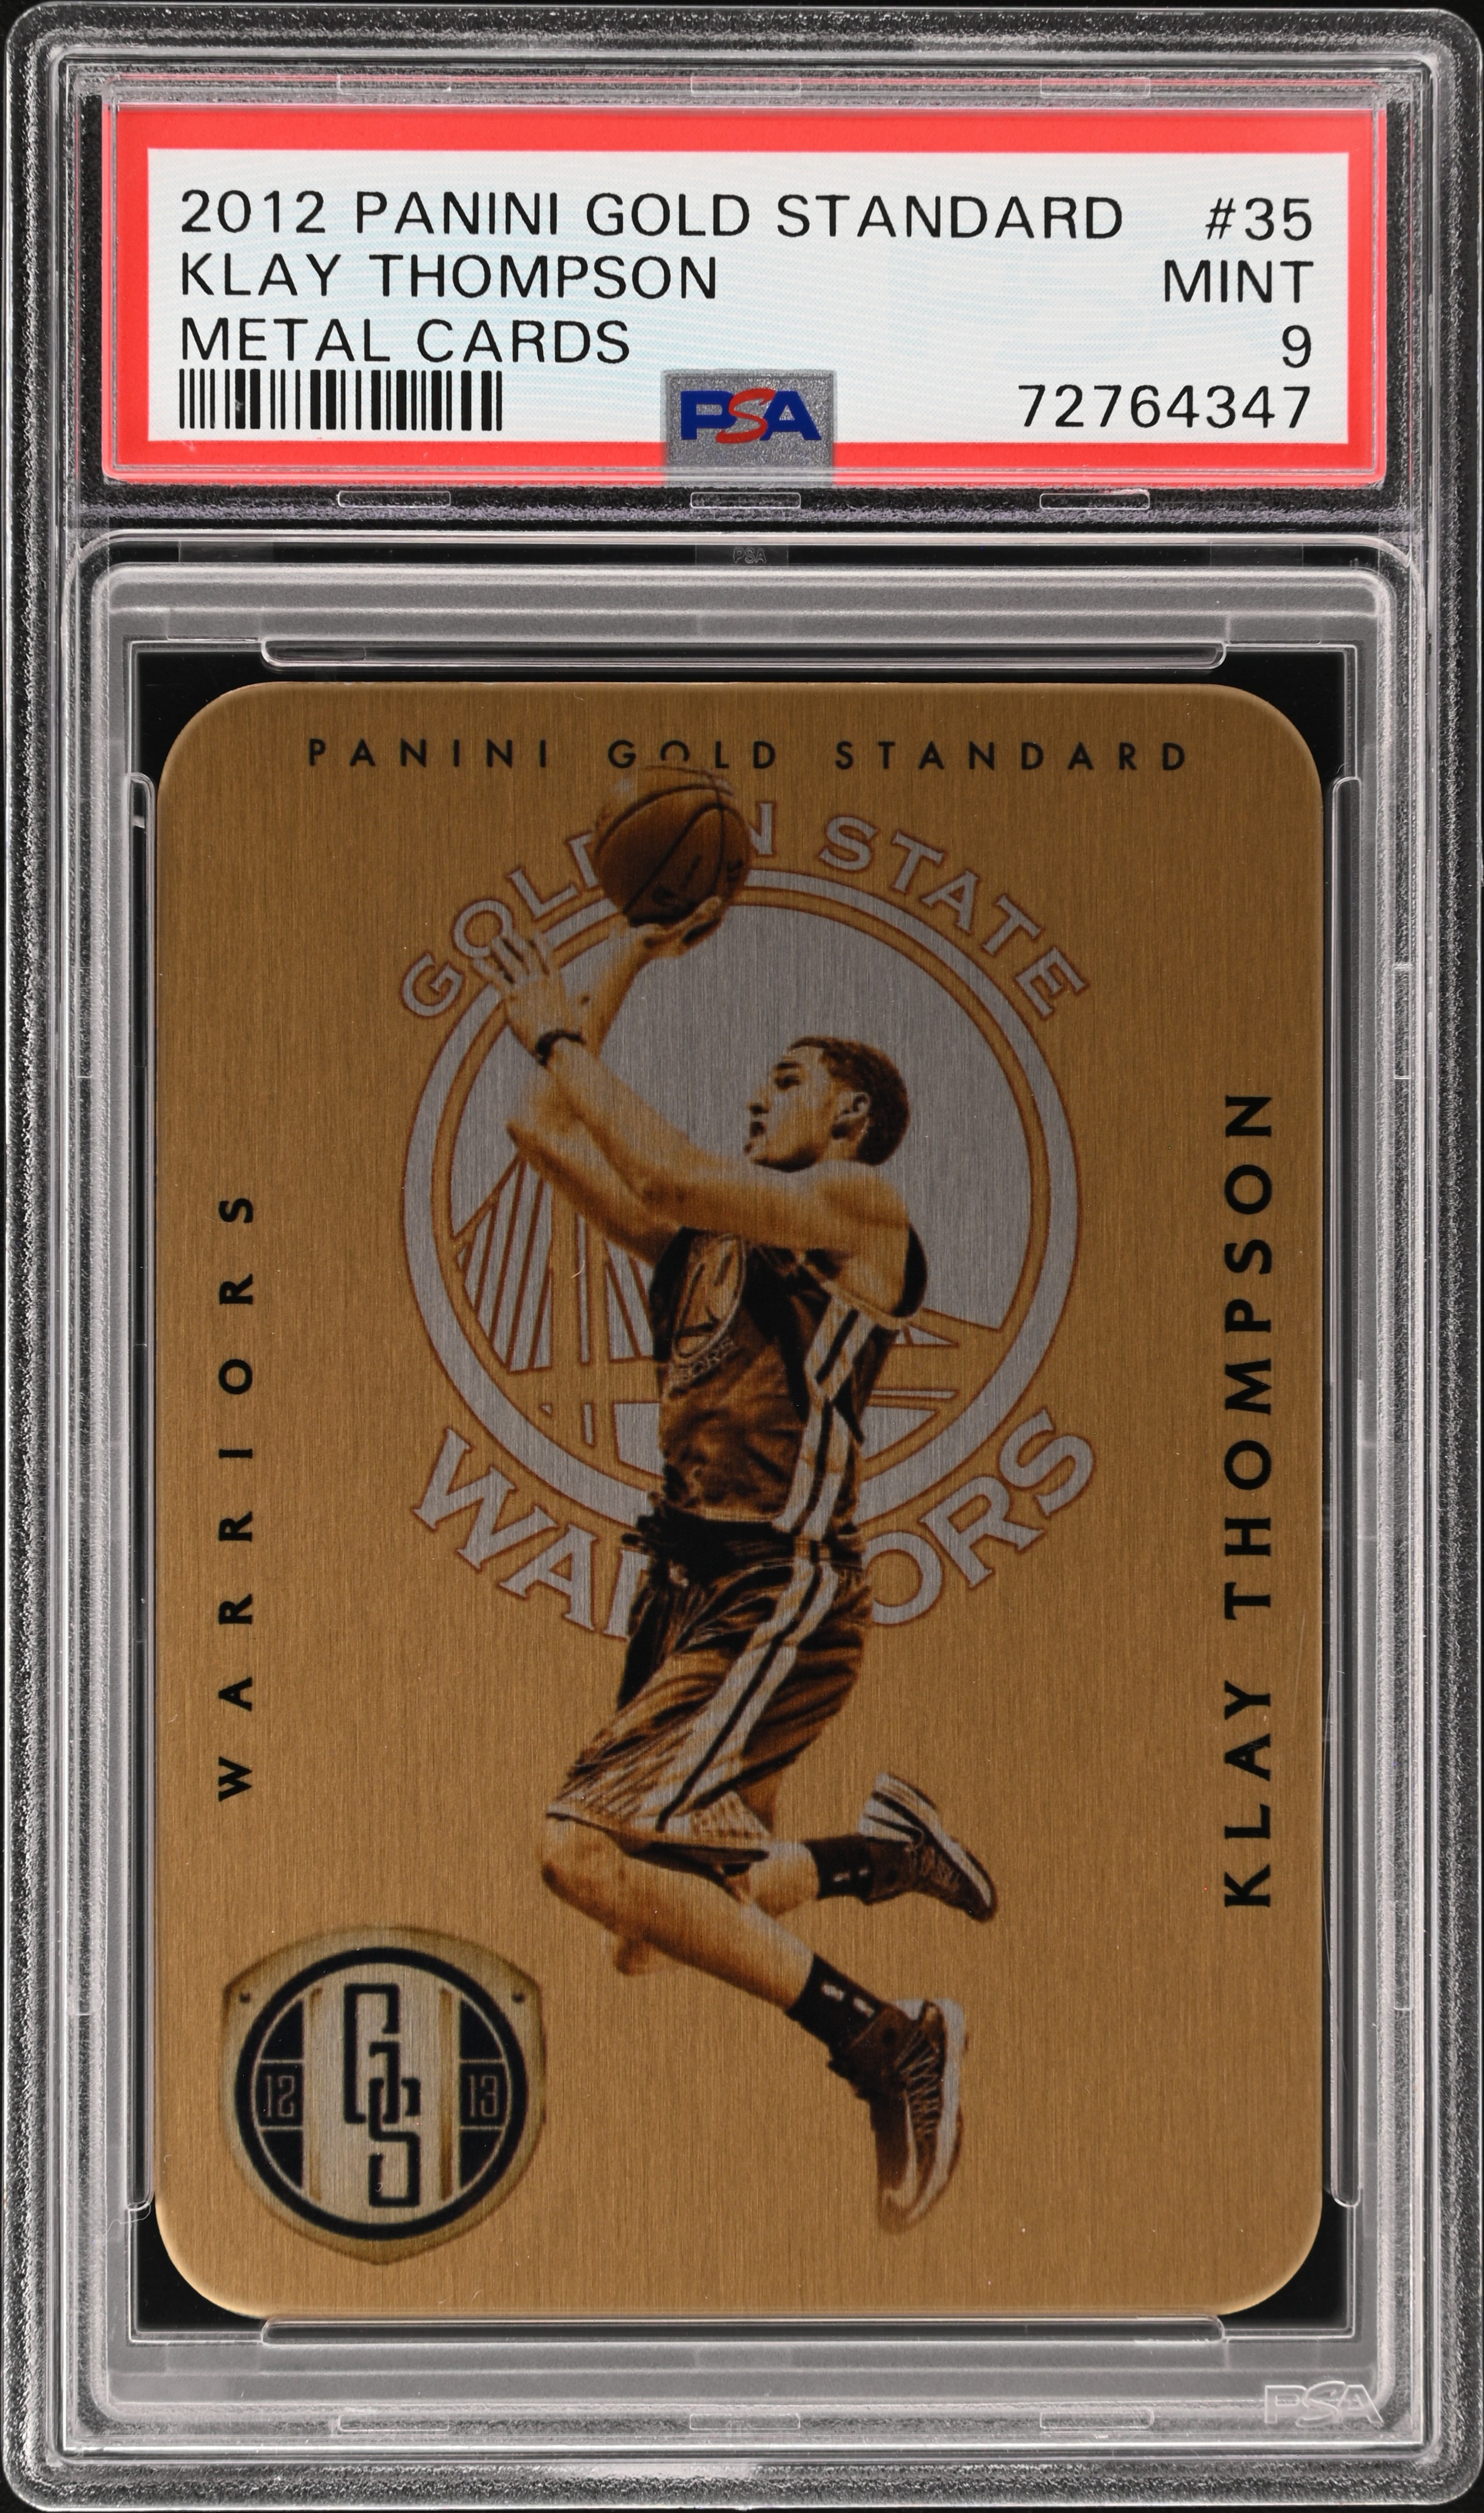 2012-13 Panini Gold Standard Metal Cards #35 Klay Thompson Rookie Card - PSA MINT 9